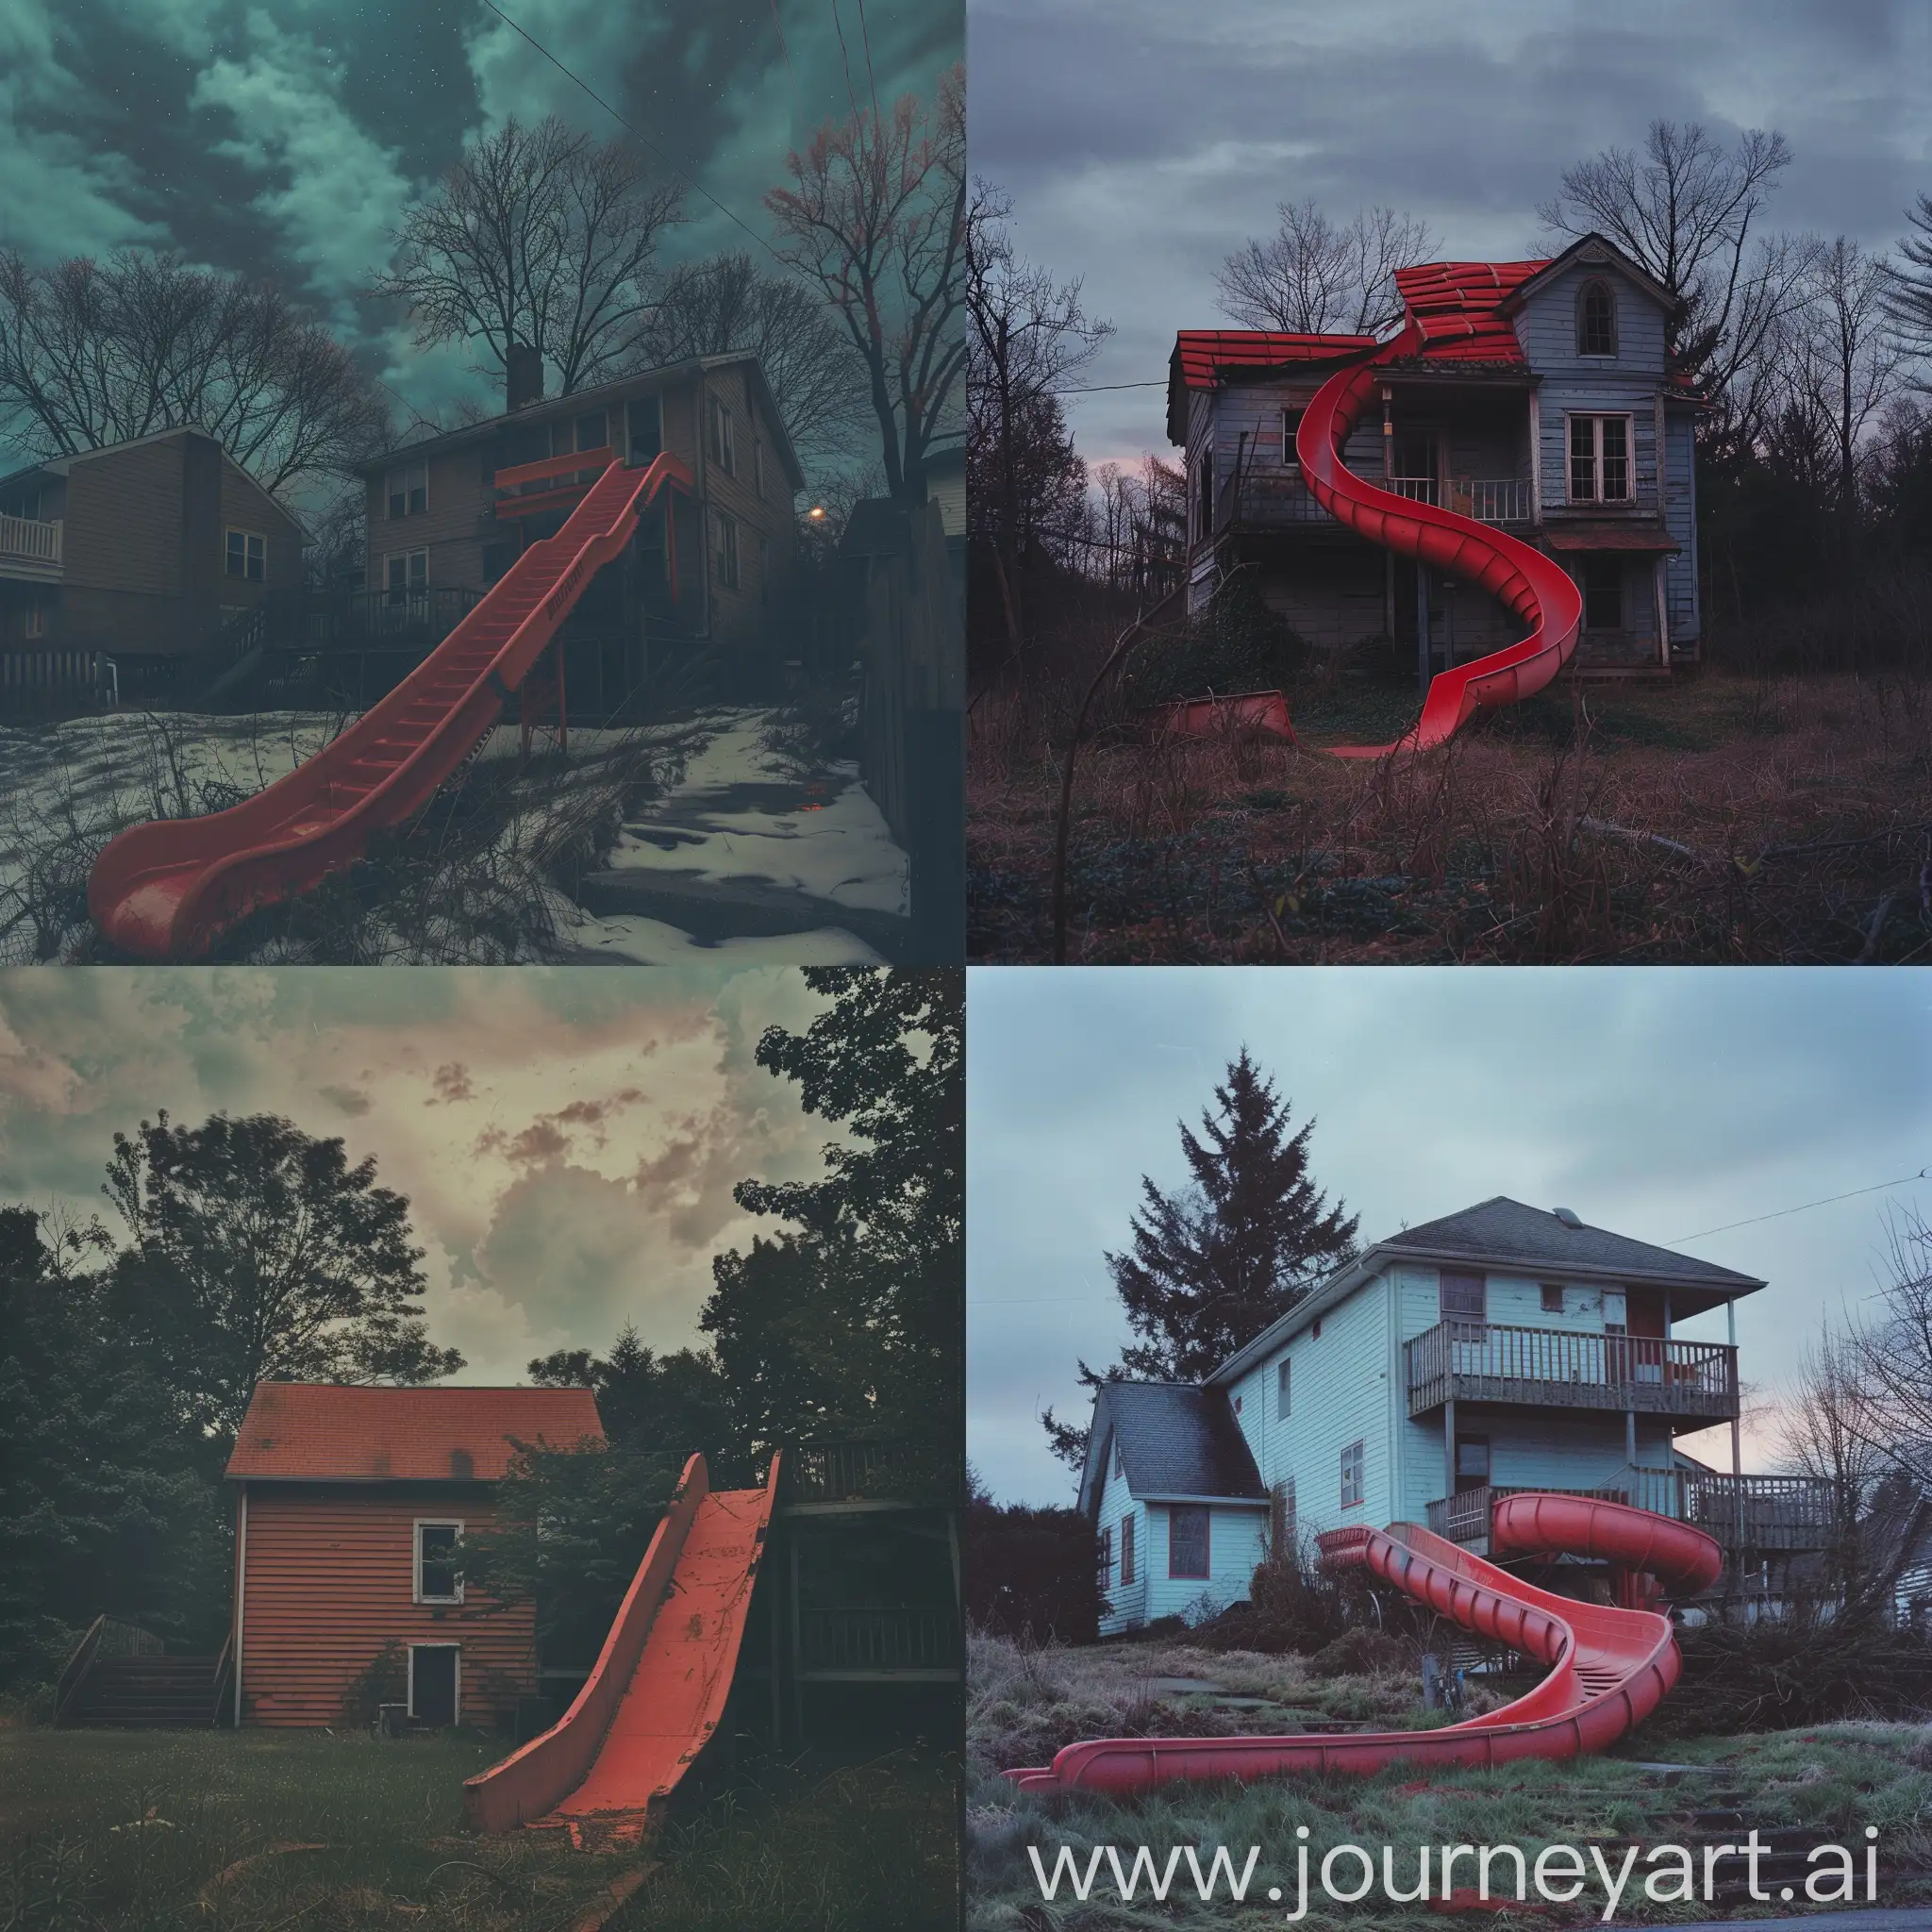 Liminal space, fake sky, eerie, nostalgic, red slide, house